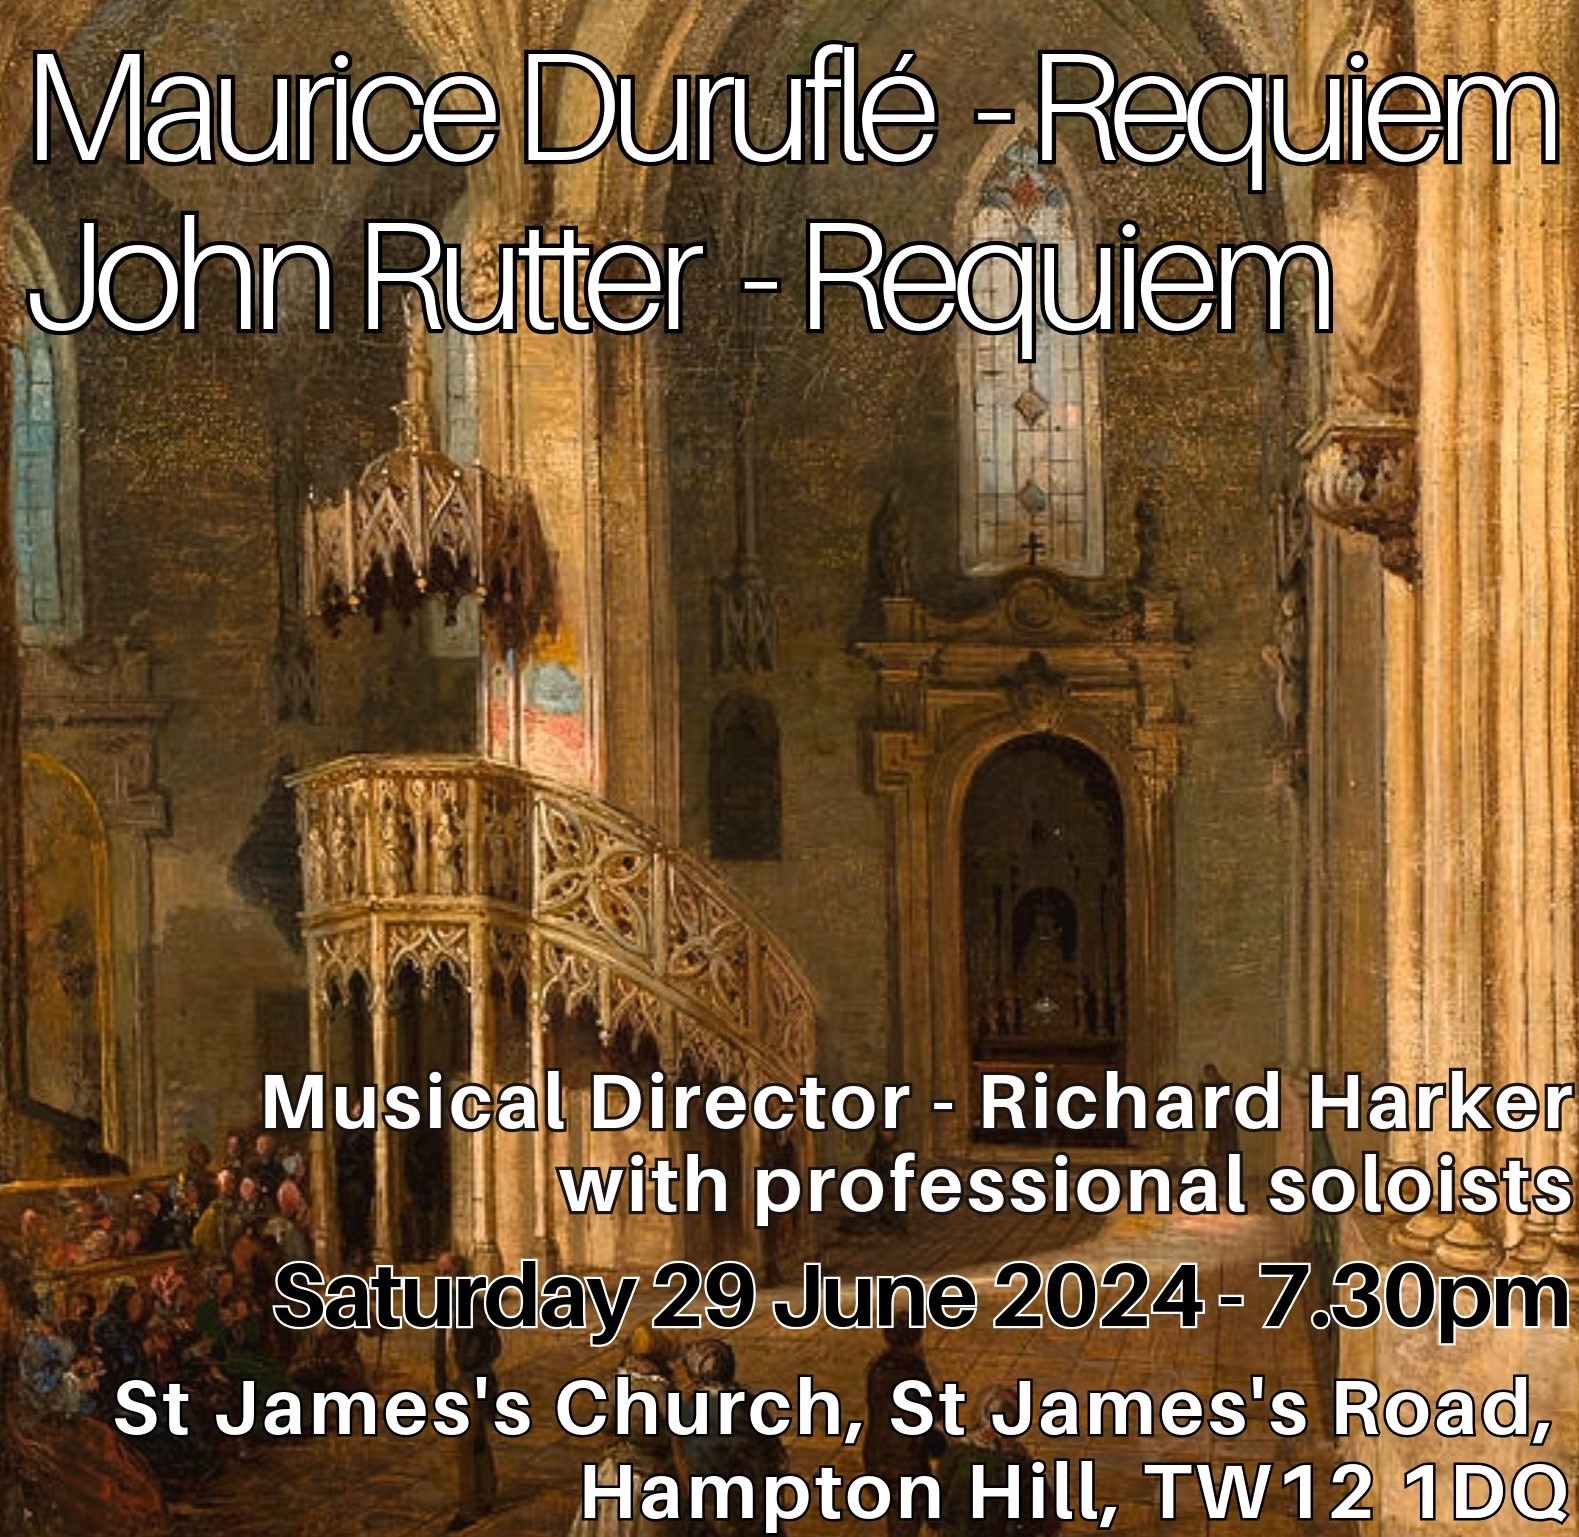 Concert: Requiems by Rutter and Duruflé